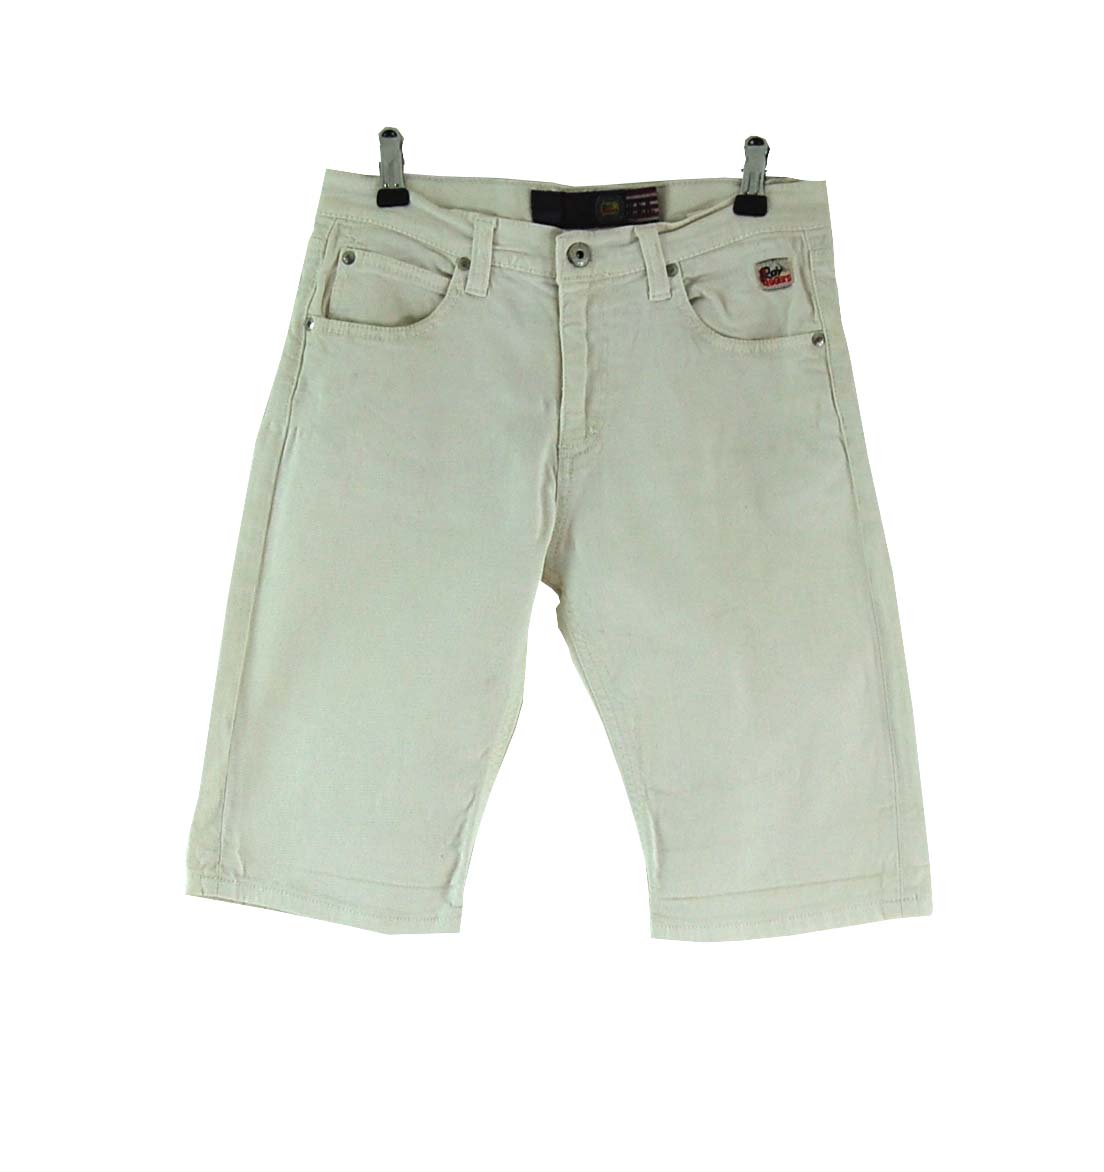 white denim shorts uk